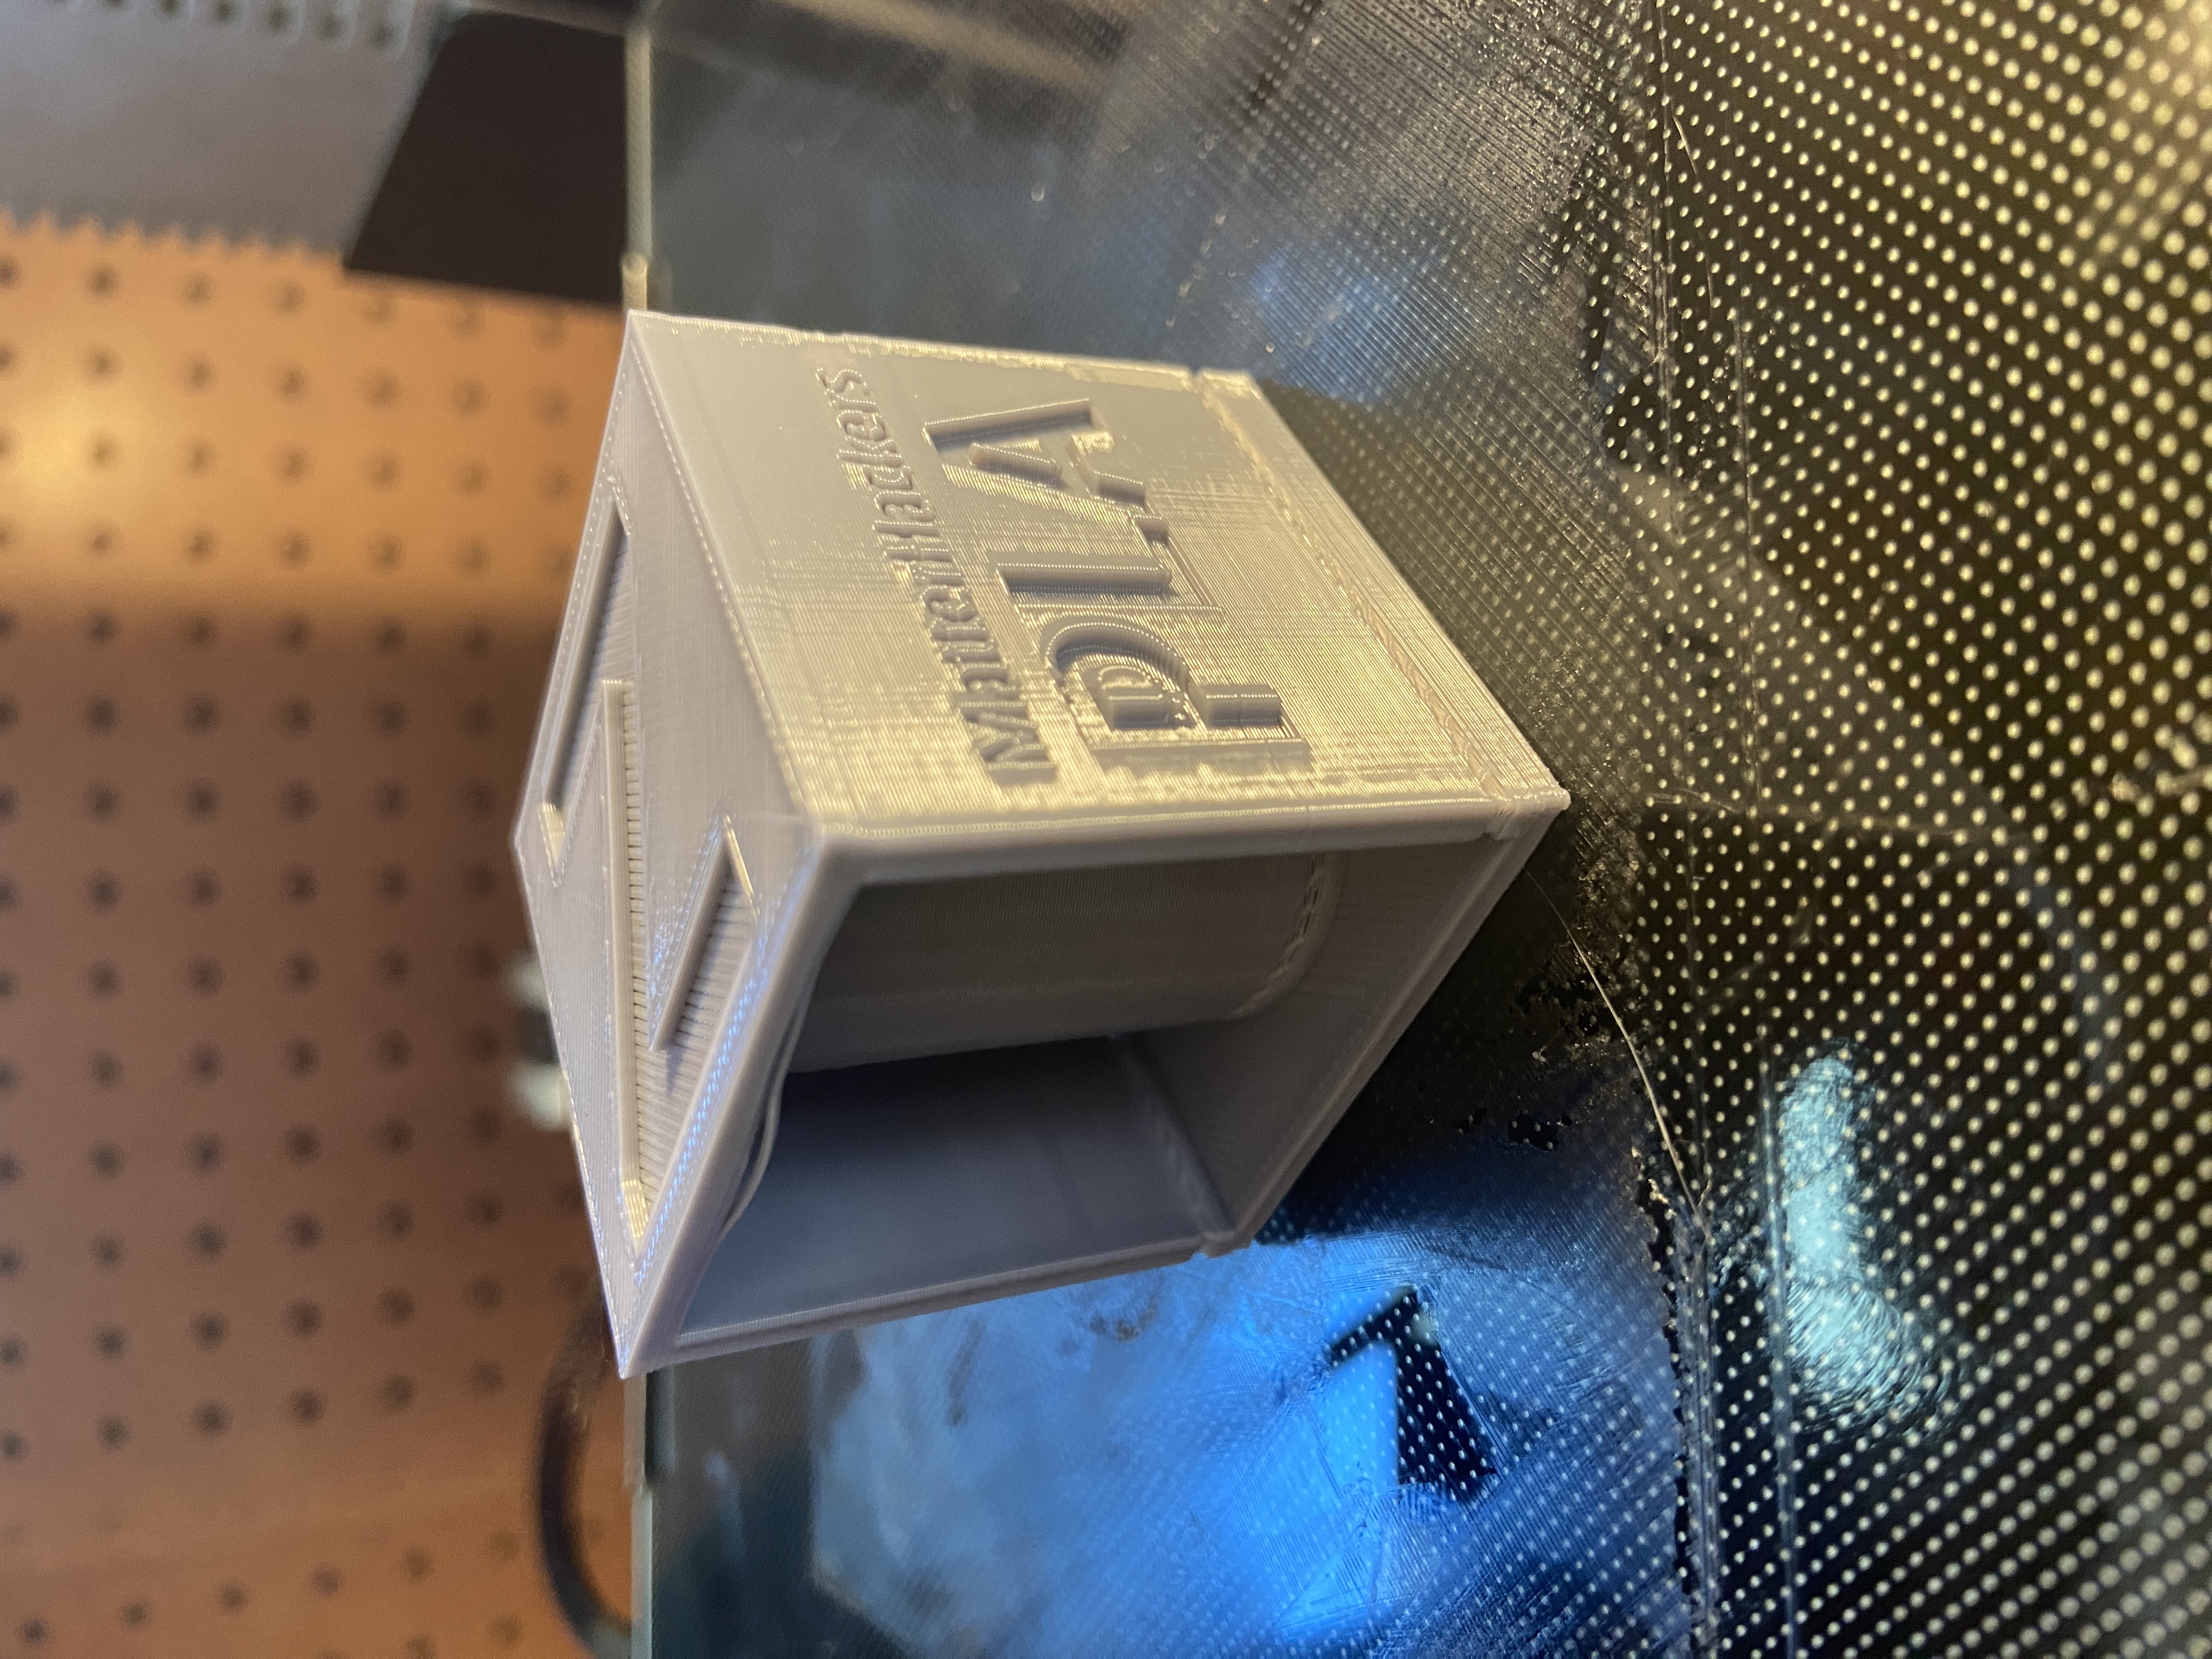 Filament Cubes - The Identifiable Calibration Cubes!